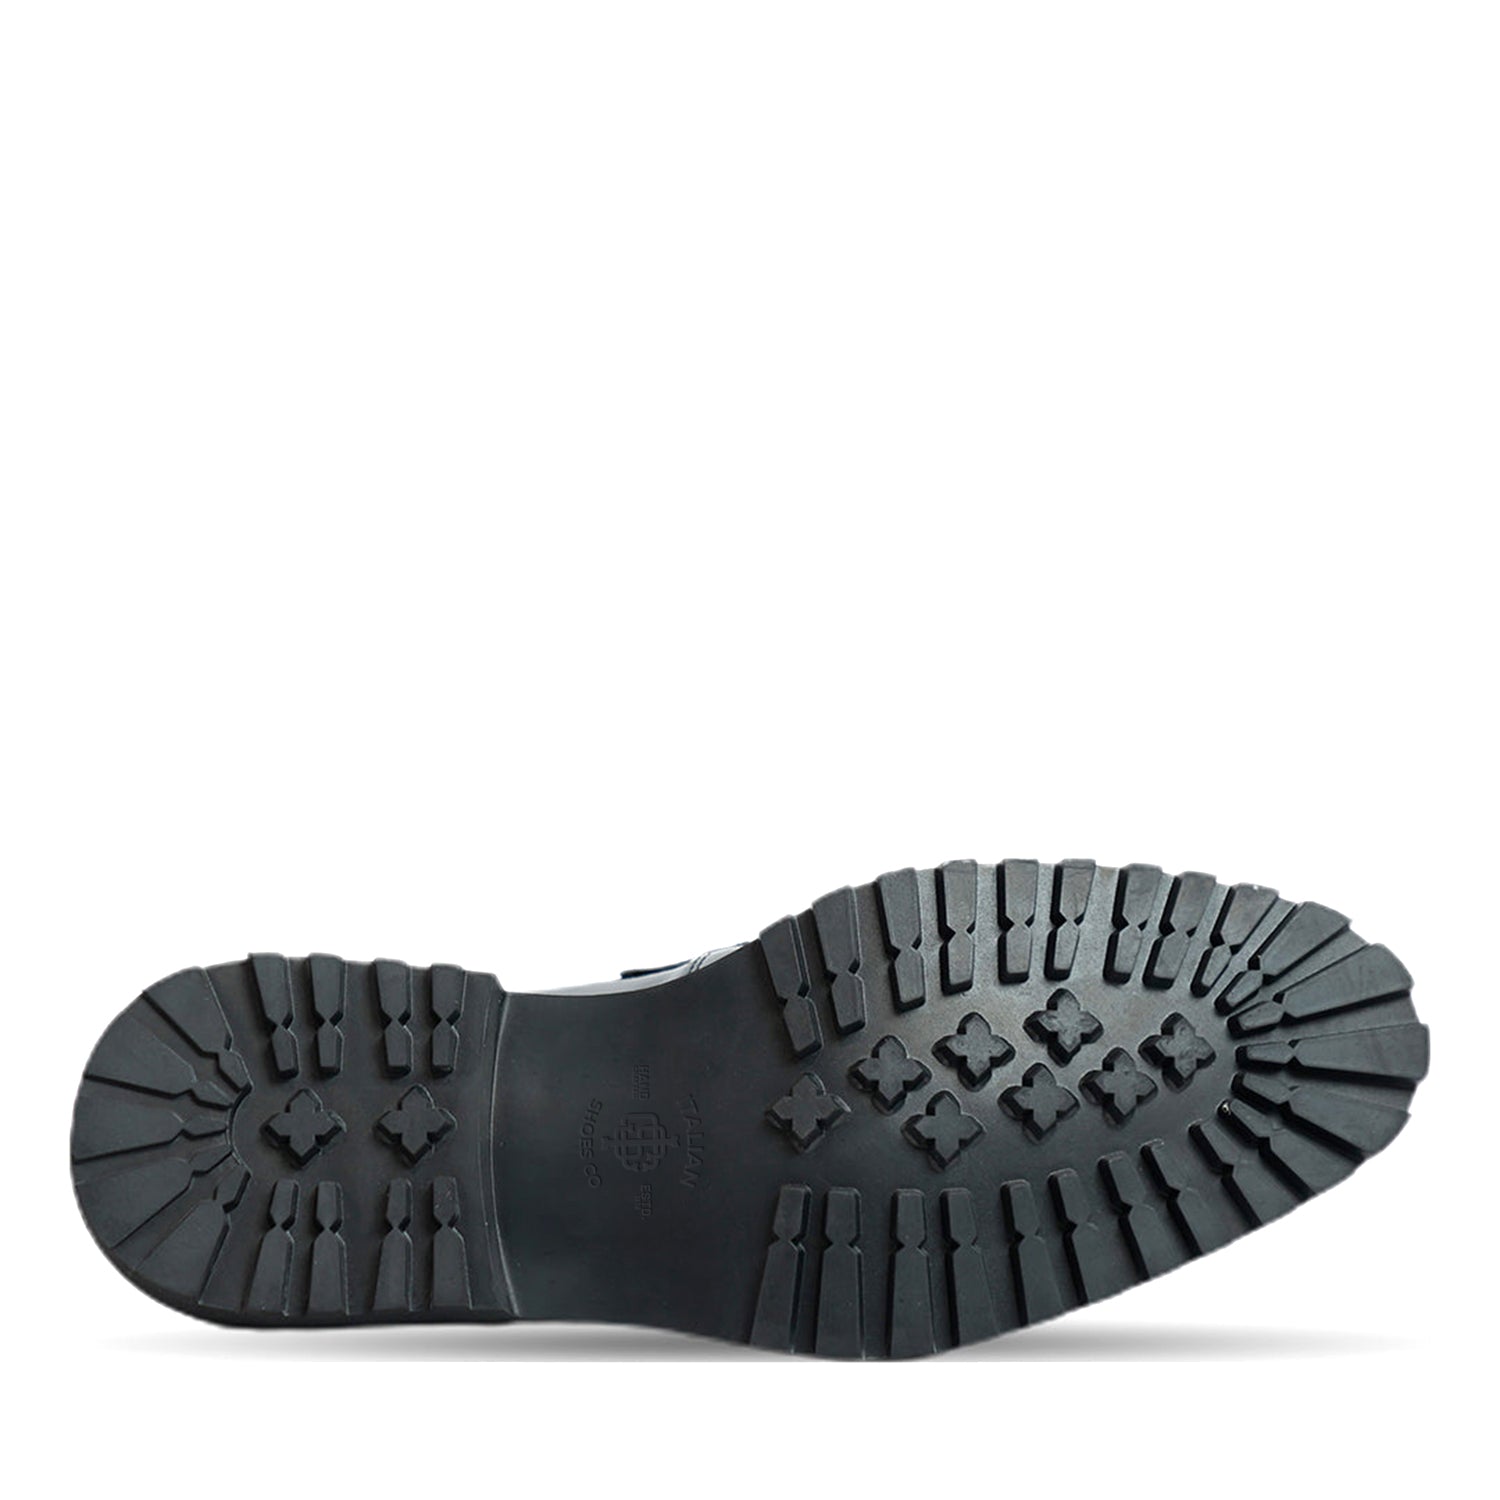 Black Patent Slip On Loafers